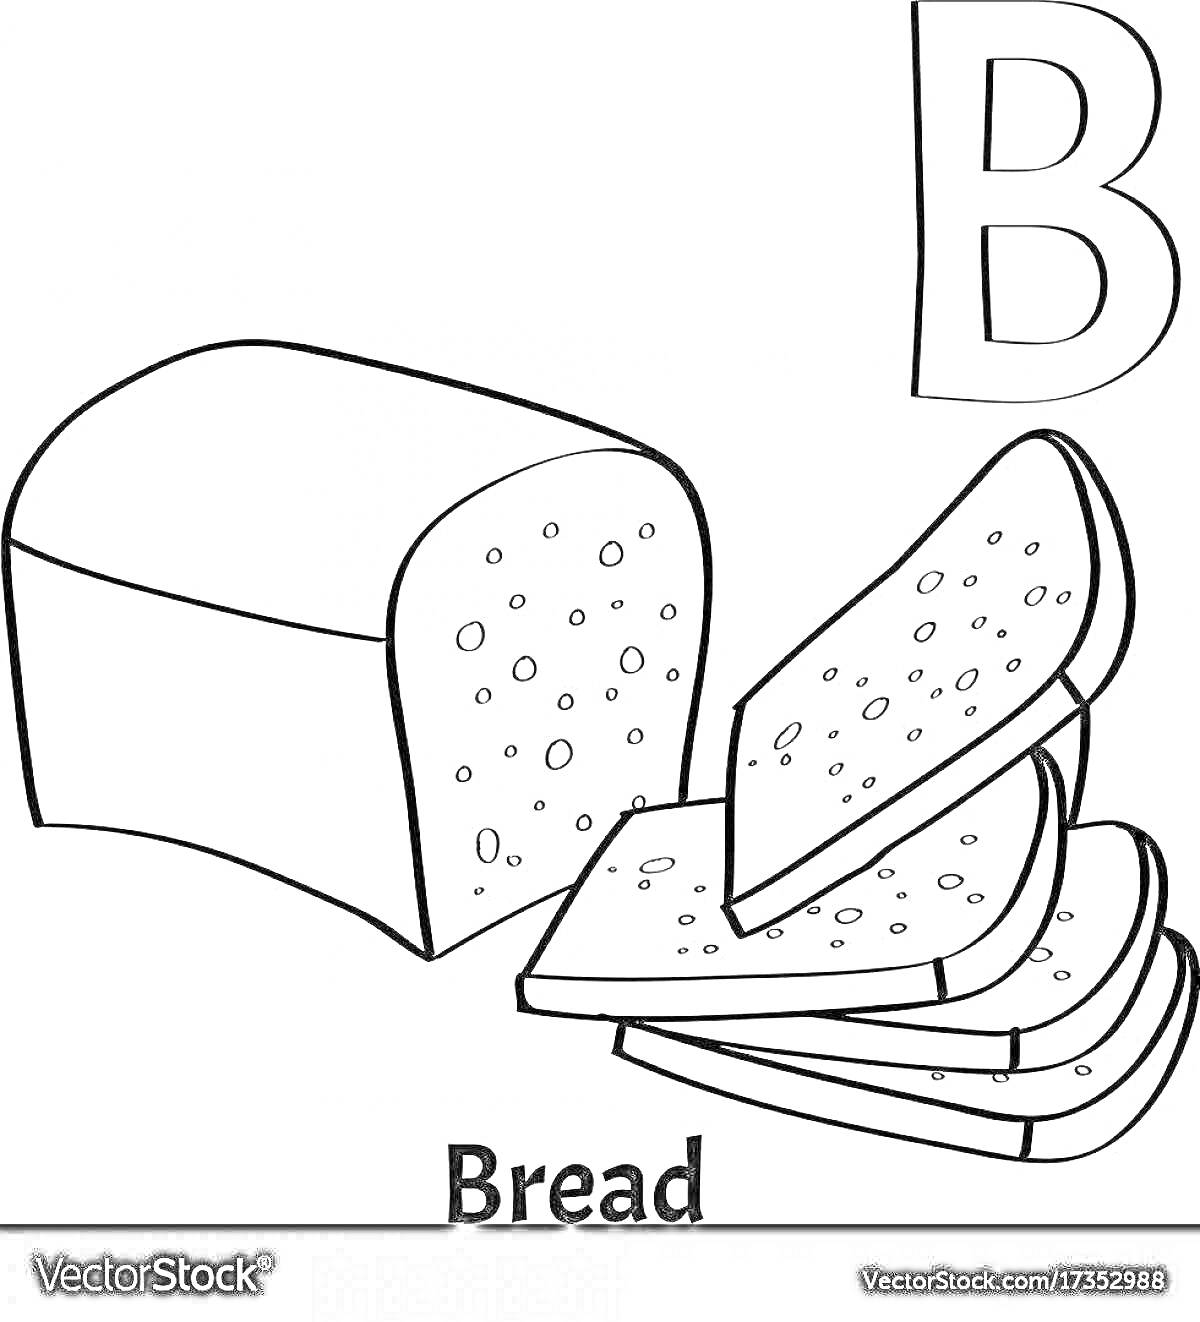 На раскраске изображено: Хлеб, Буханка, Буква B, Английский алфавит, Еда, Выпечка